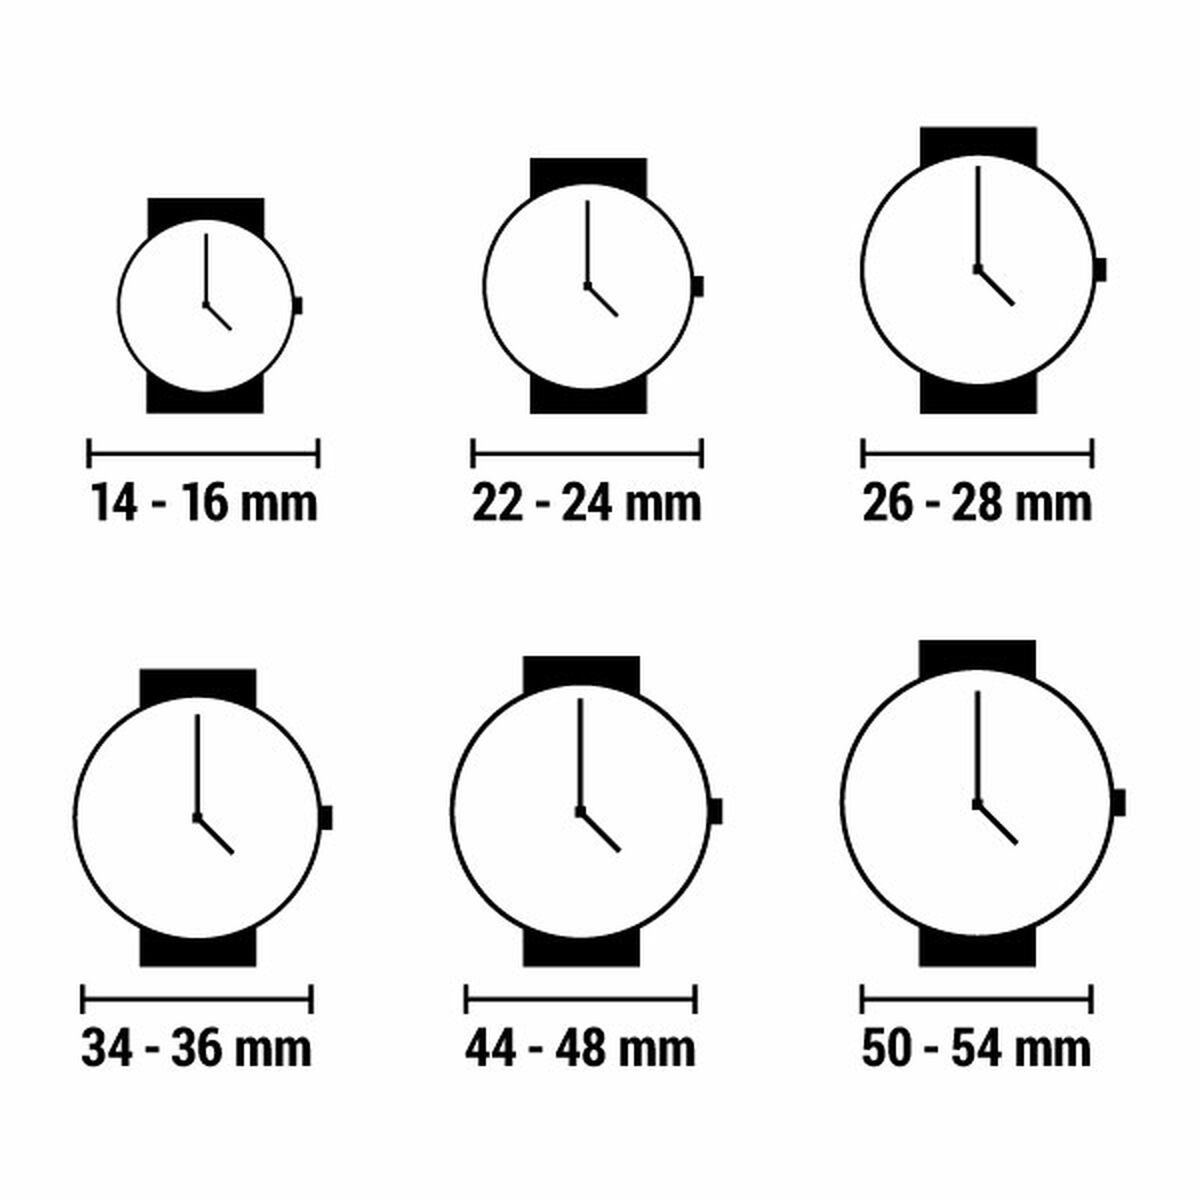 Horloge Dames Chiara Ferragni R1953100511 (Ø 32 mm)